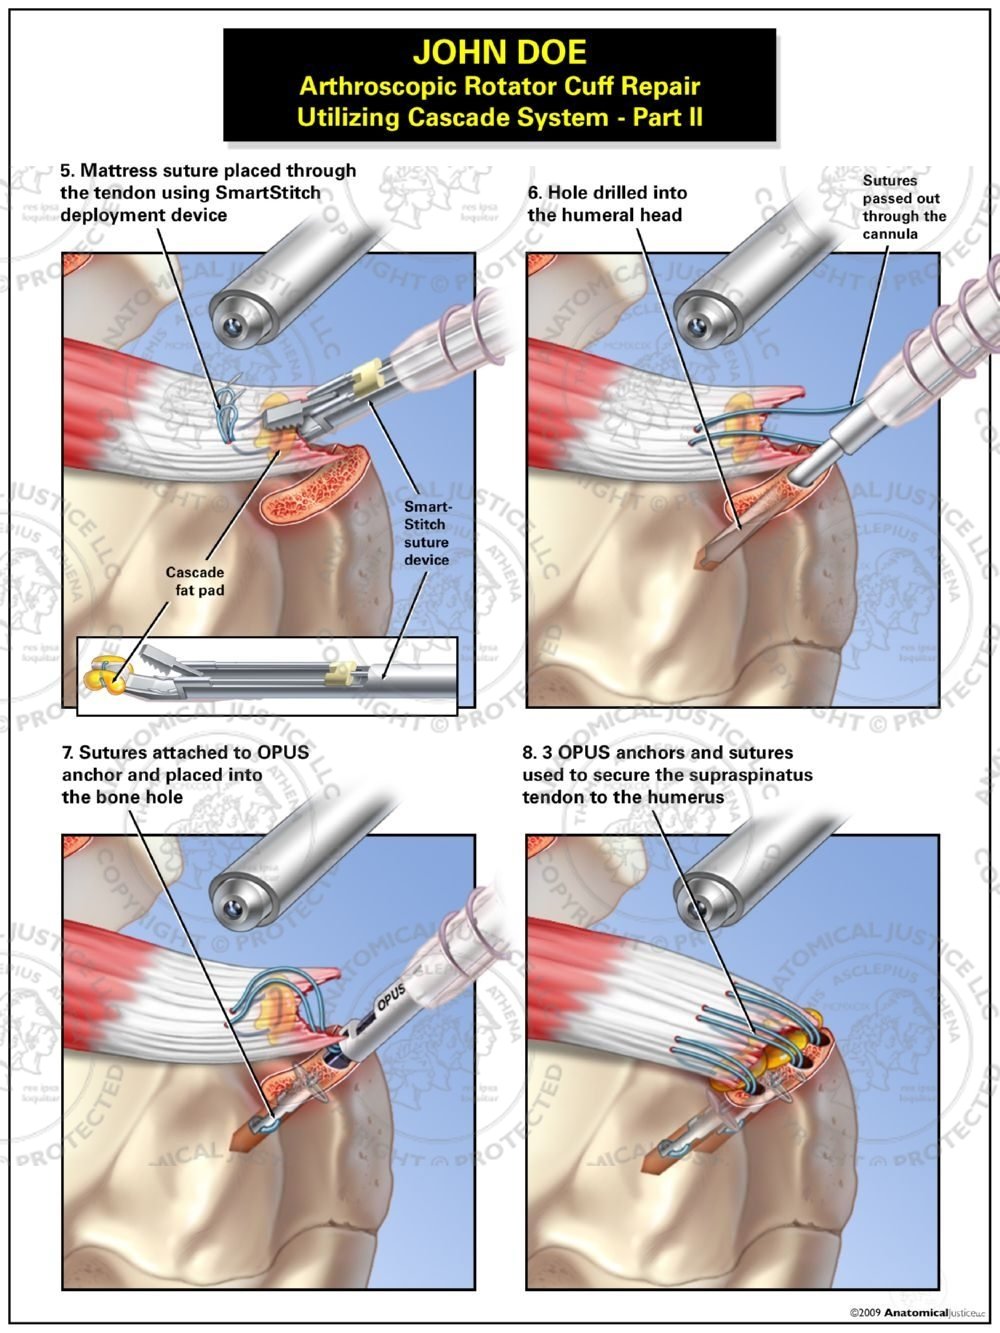 Arthroscopic Rotator Cuff Repair Utilizing Cascade System – Part II